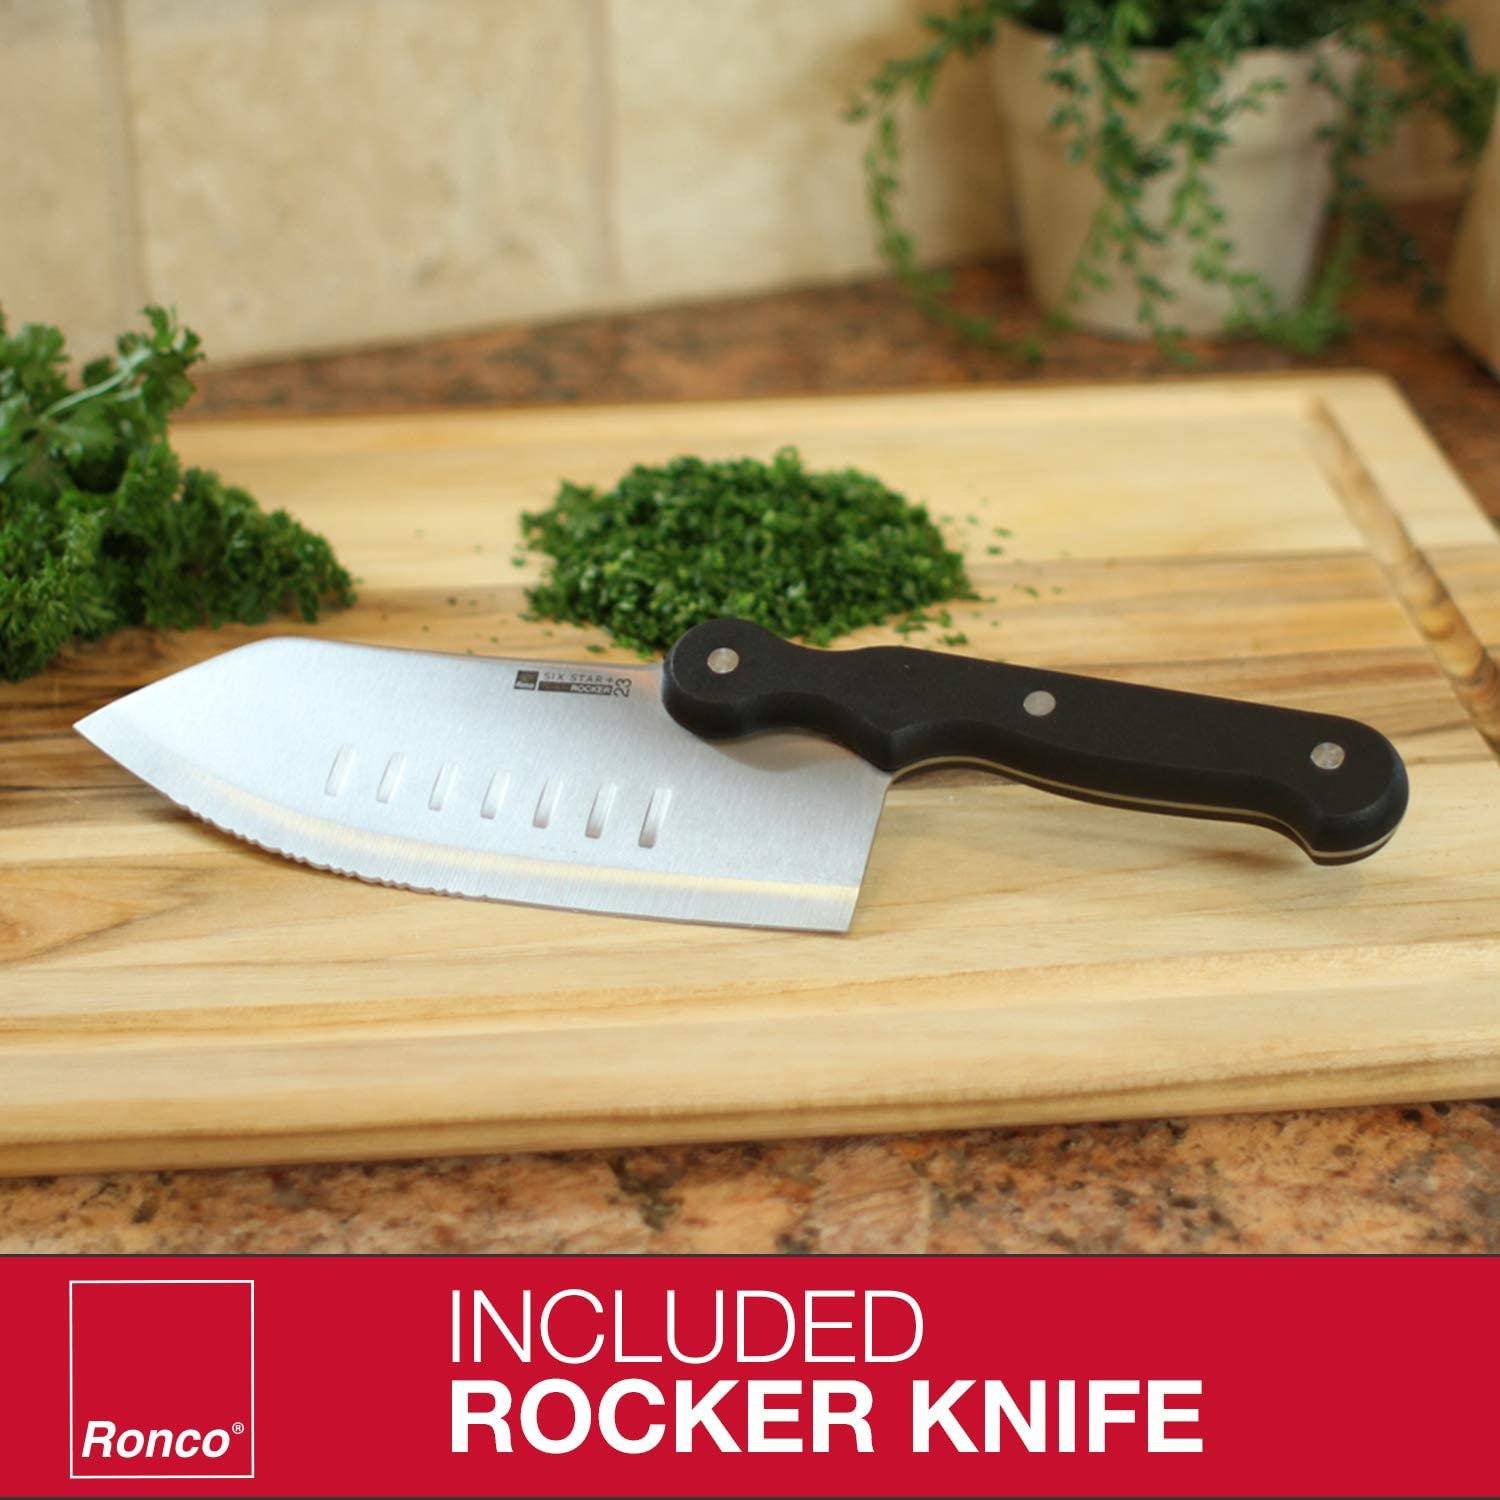 Knife Set: Ronco Six Star Knife Set